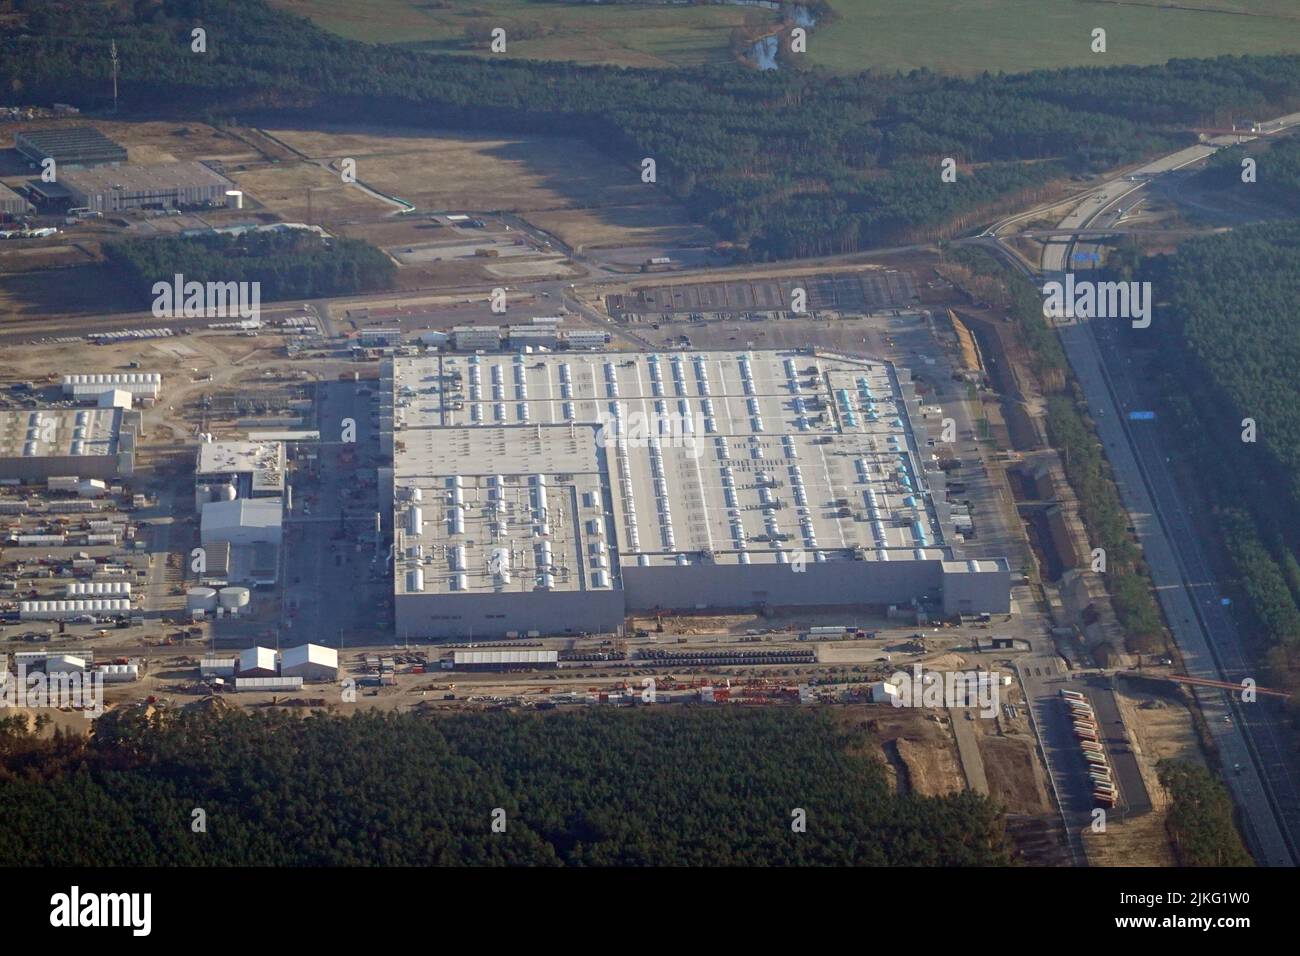 27.03.2022, Germany, Brandenburg, Gruenheide - Aerial view of the Tesla Gigafactory Berlin-Brandenburg. 00S220327D237CAROEX.JPG [MODEL RELEASE: NO, PR Stock Photo